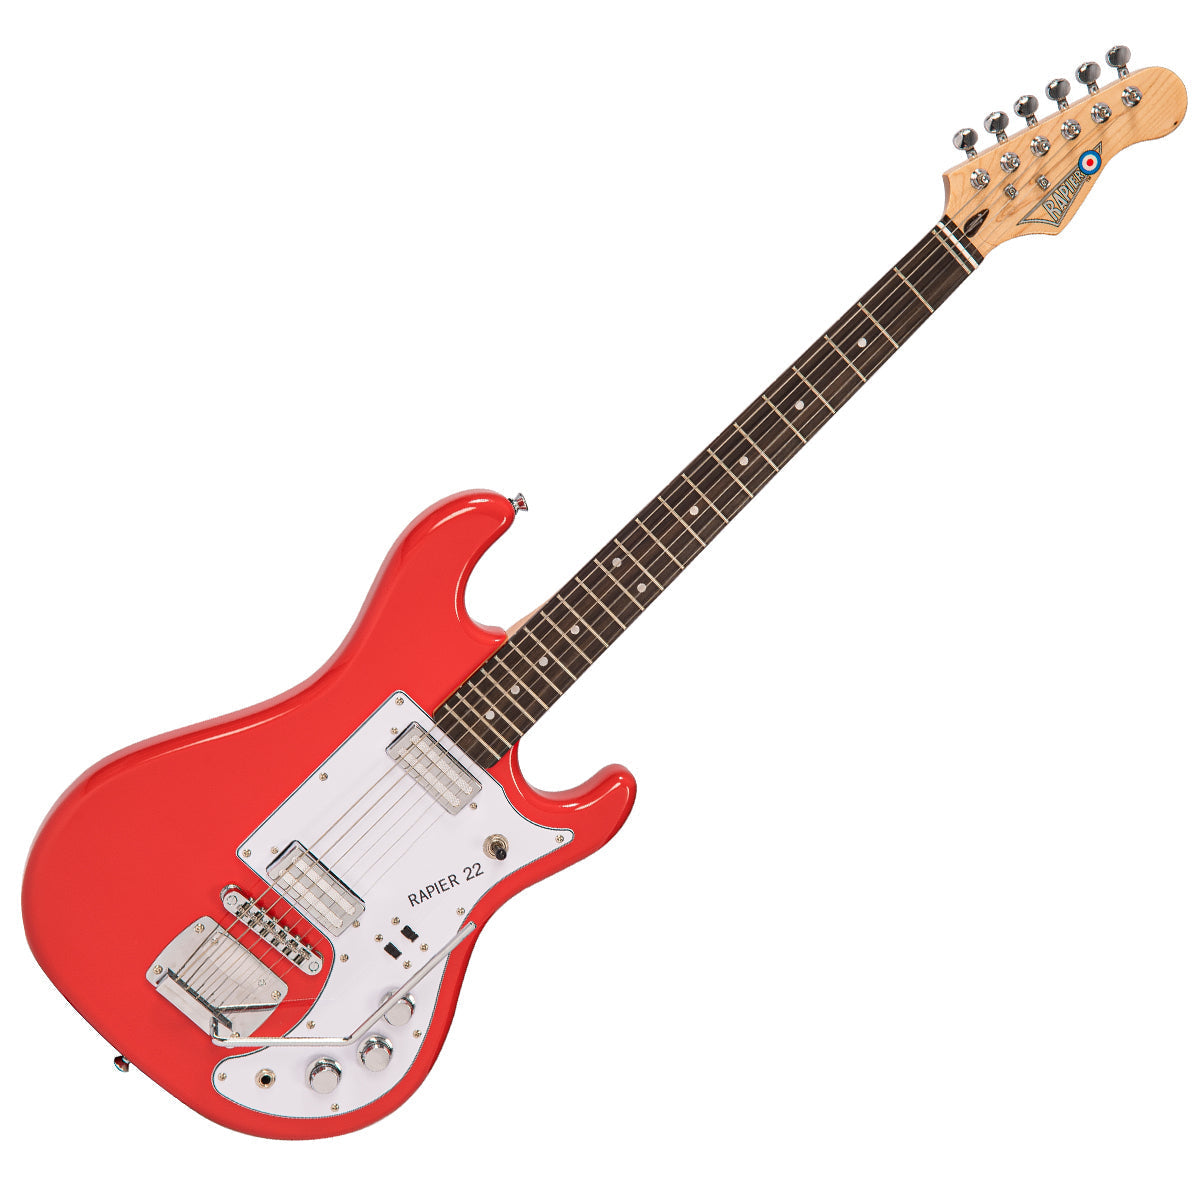 Rapier 22 Electric Guitar ~ Fiesta Red, Electric Guitar for sale at Richards Guitars.